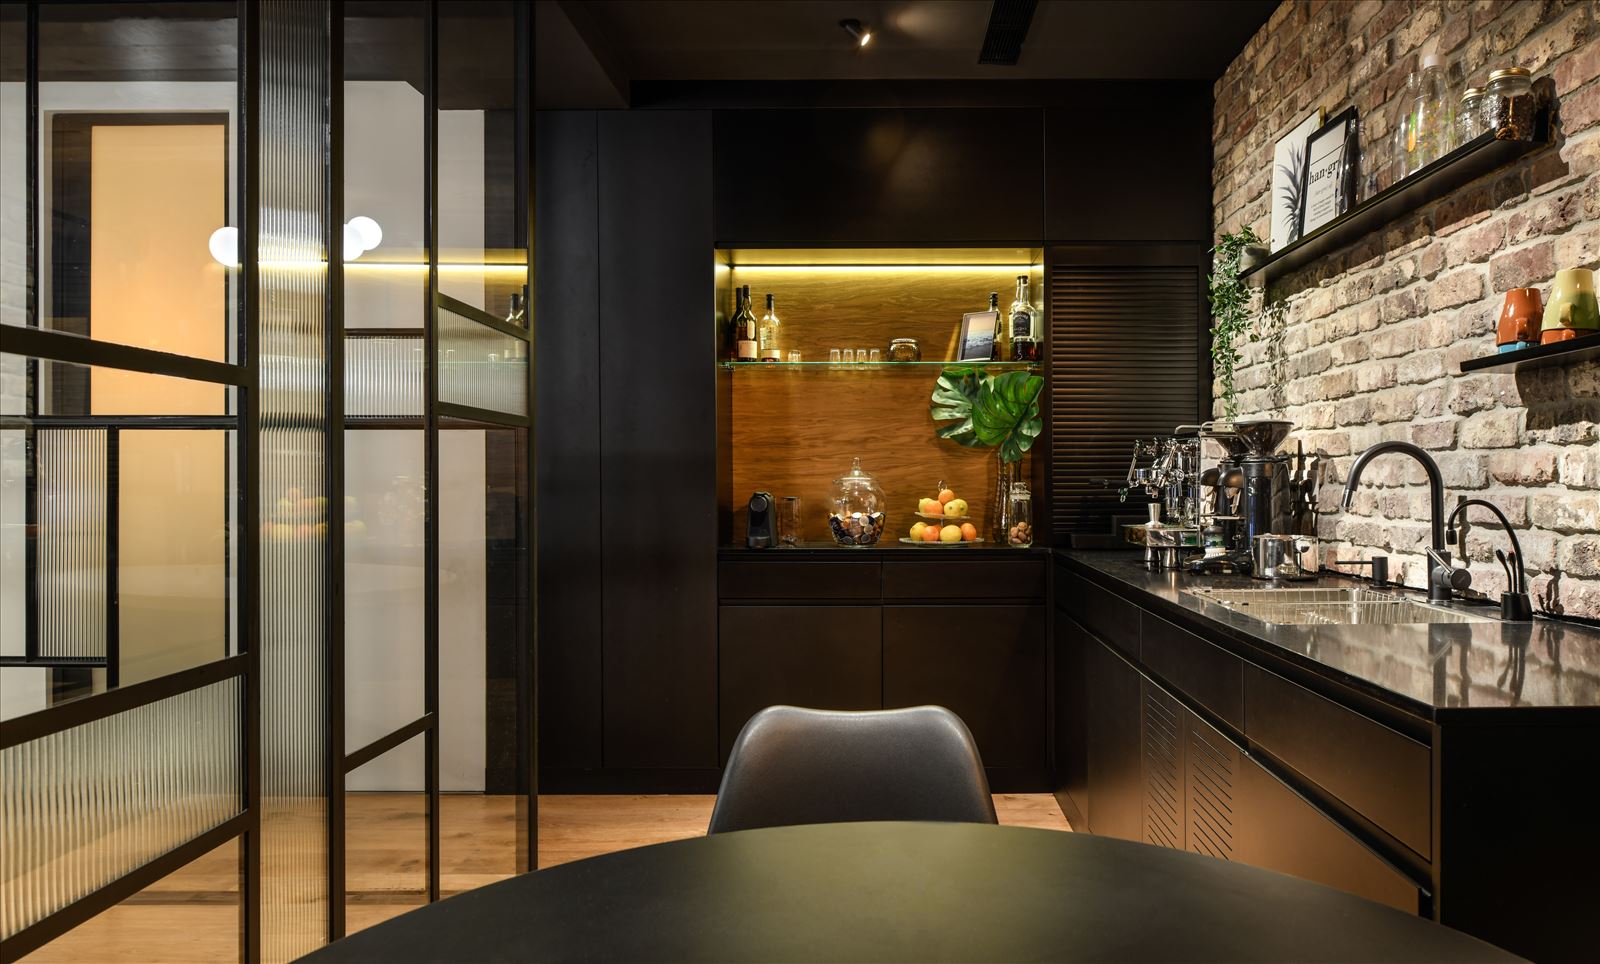 Arbitrage office גופי תאורה מאירים את מרחב המטבח בעיצוב של דורי קמחי